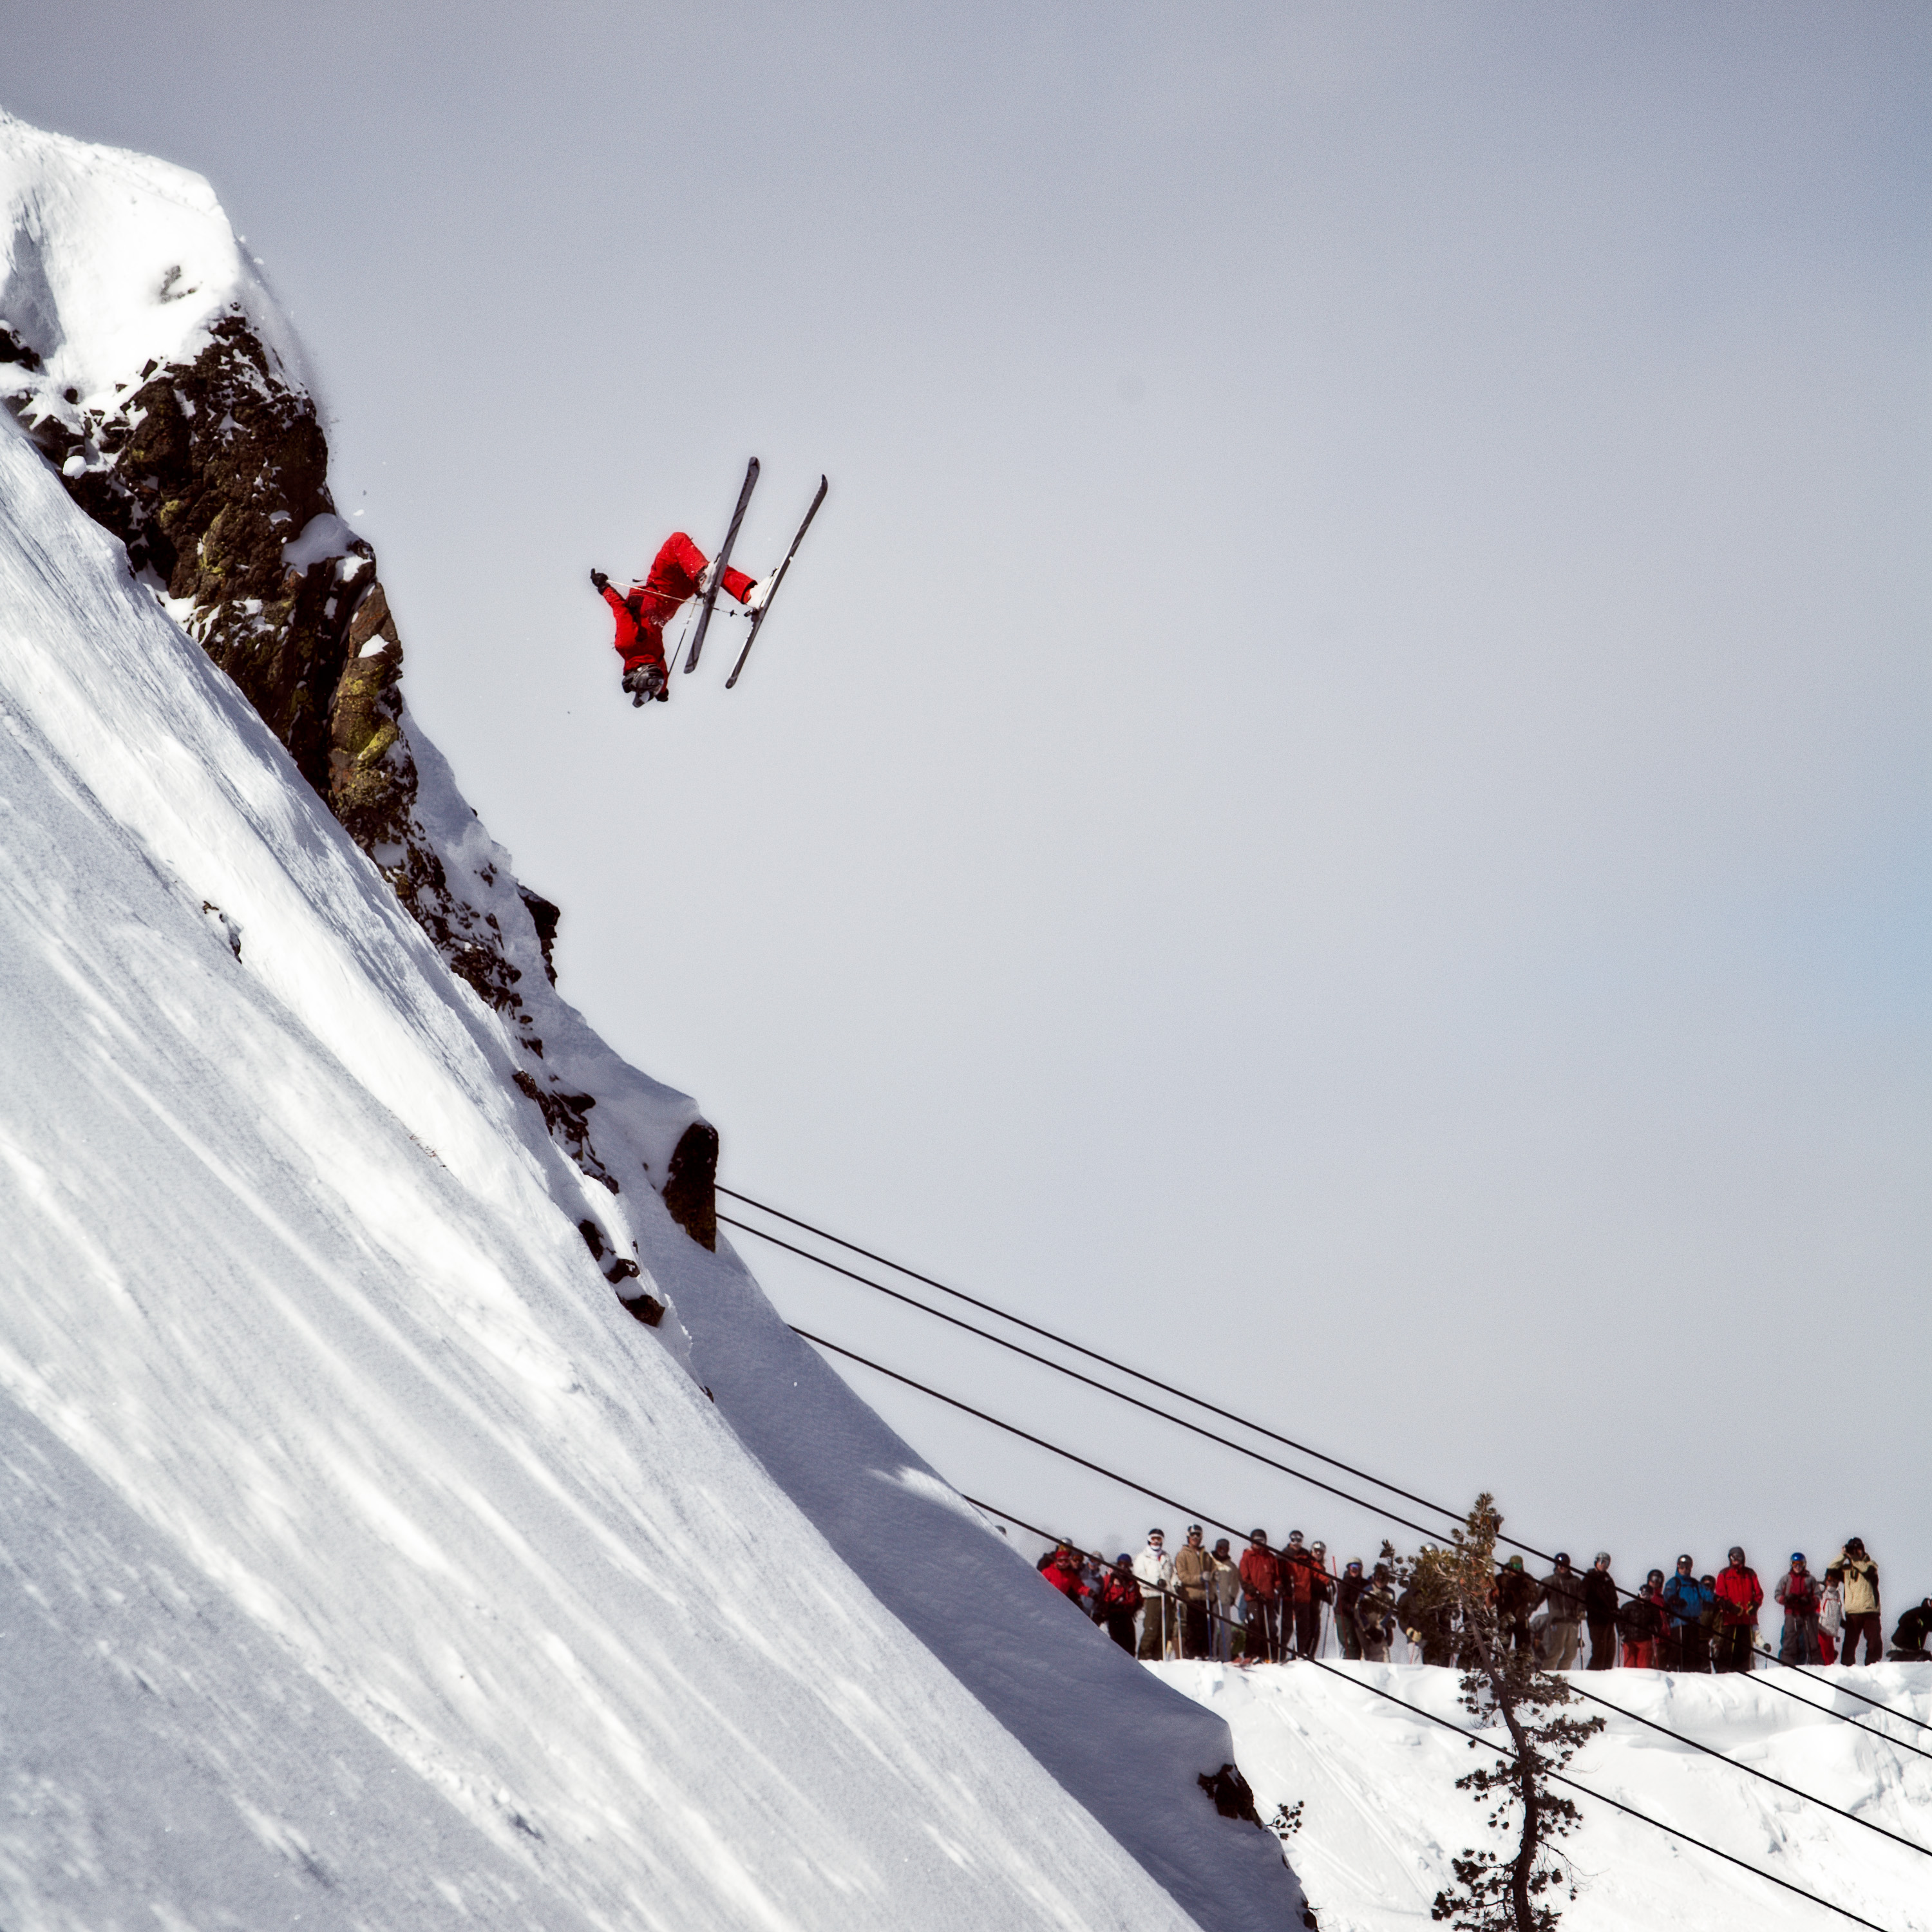 Everyone loves a ski bum. skier: miles clark. photo: tom tomkinson